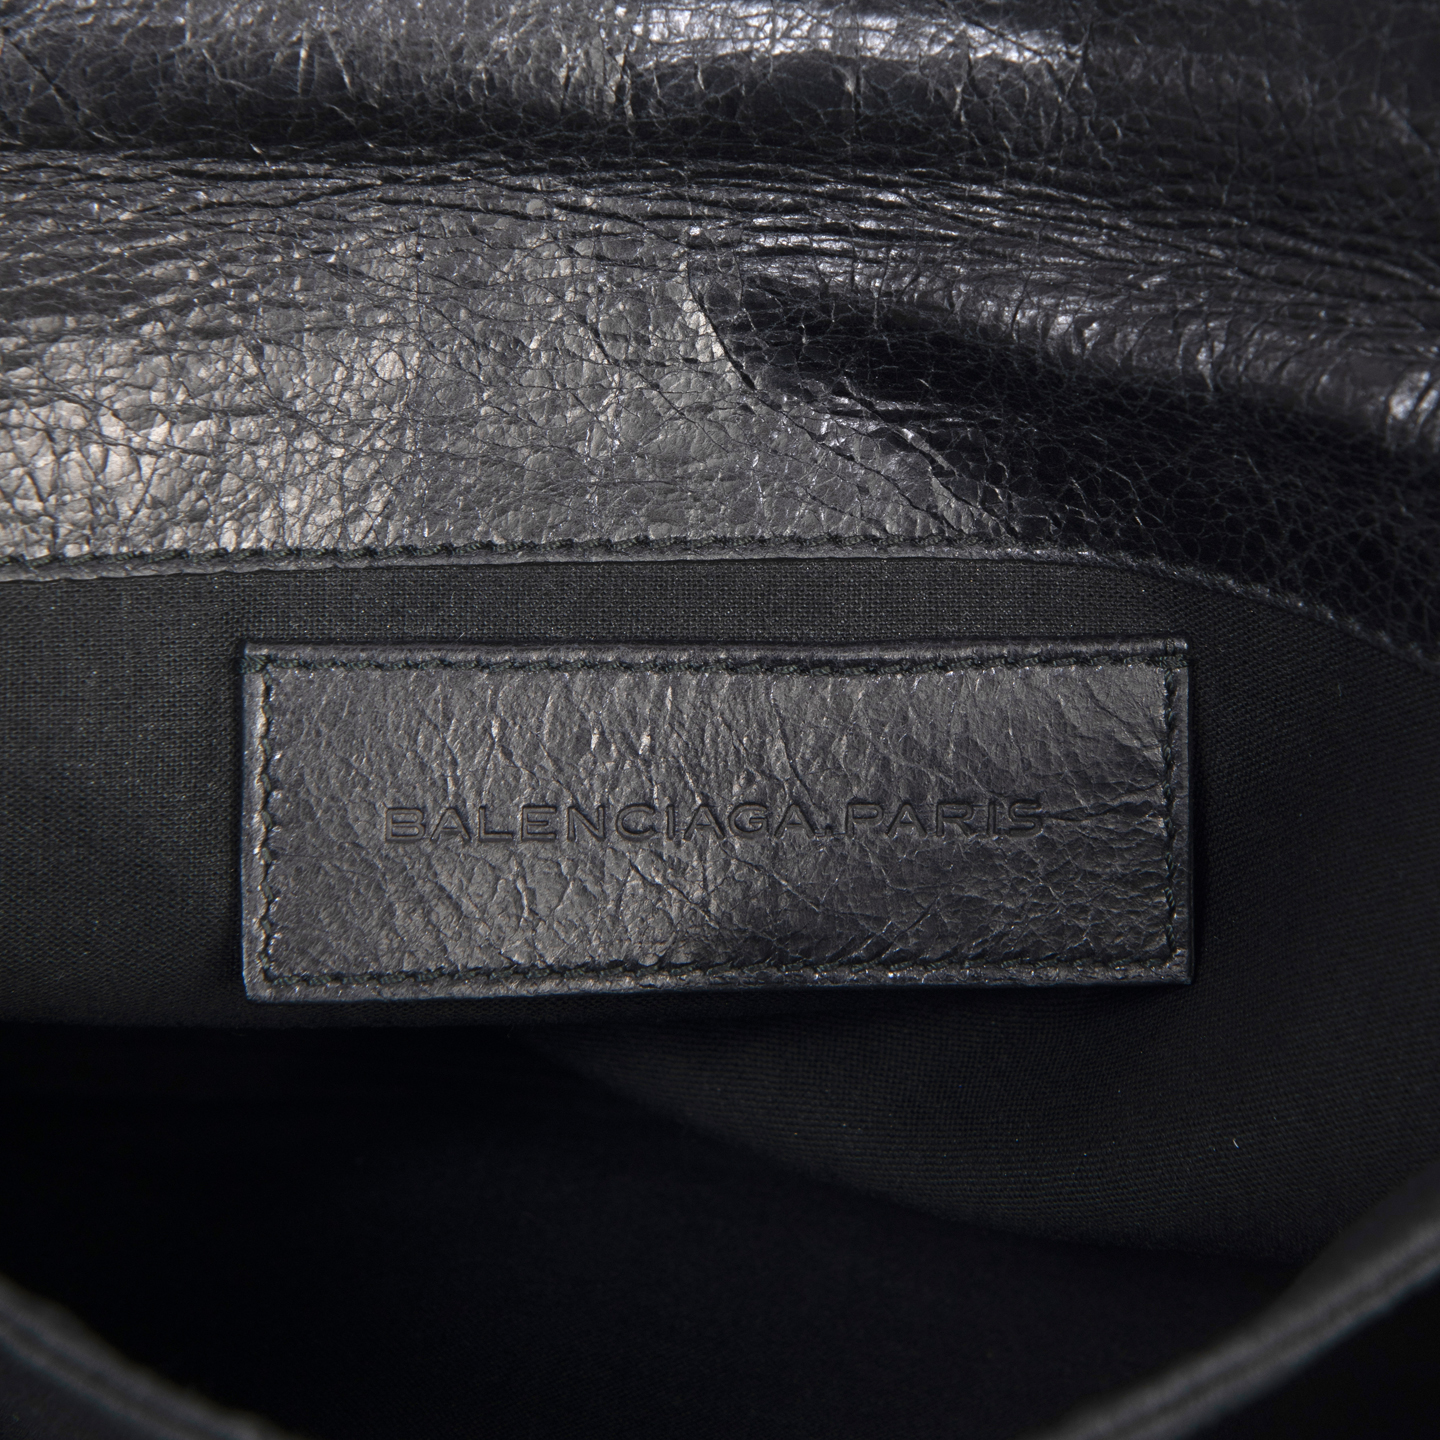 Balenciaga Black Lambskin Leather Giant 21 Silver Envelope Clutch Bag ...